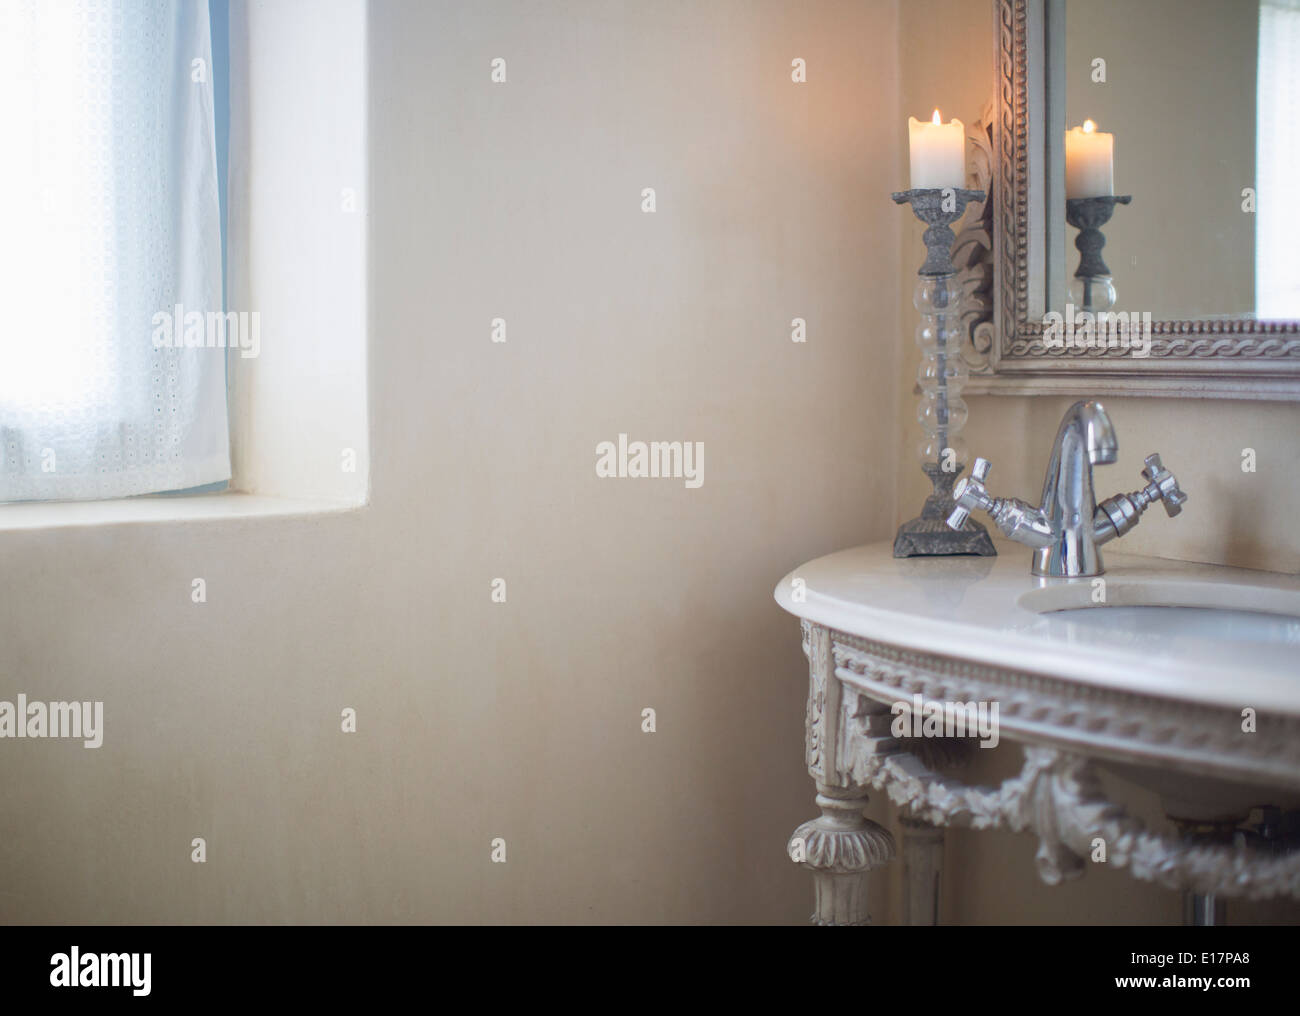 Candle burning in luxury bathroom Stock Photo